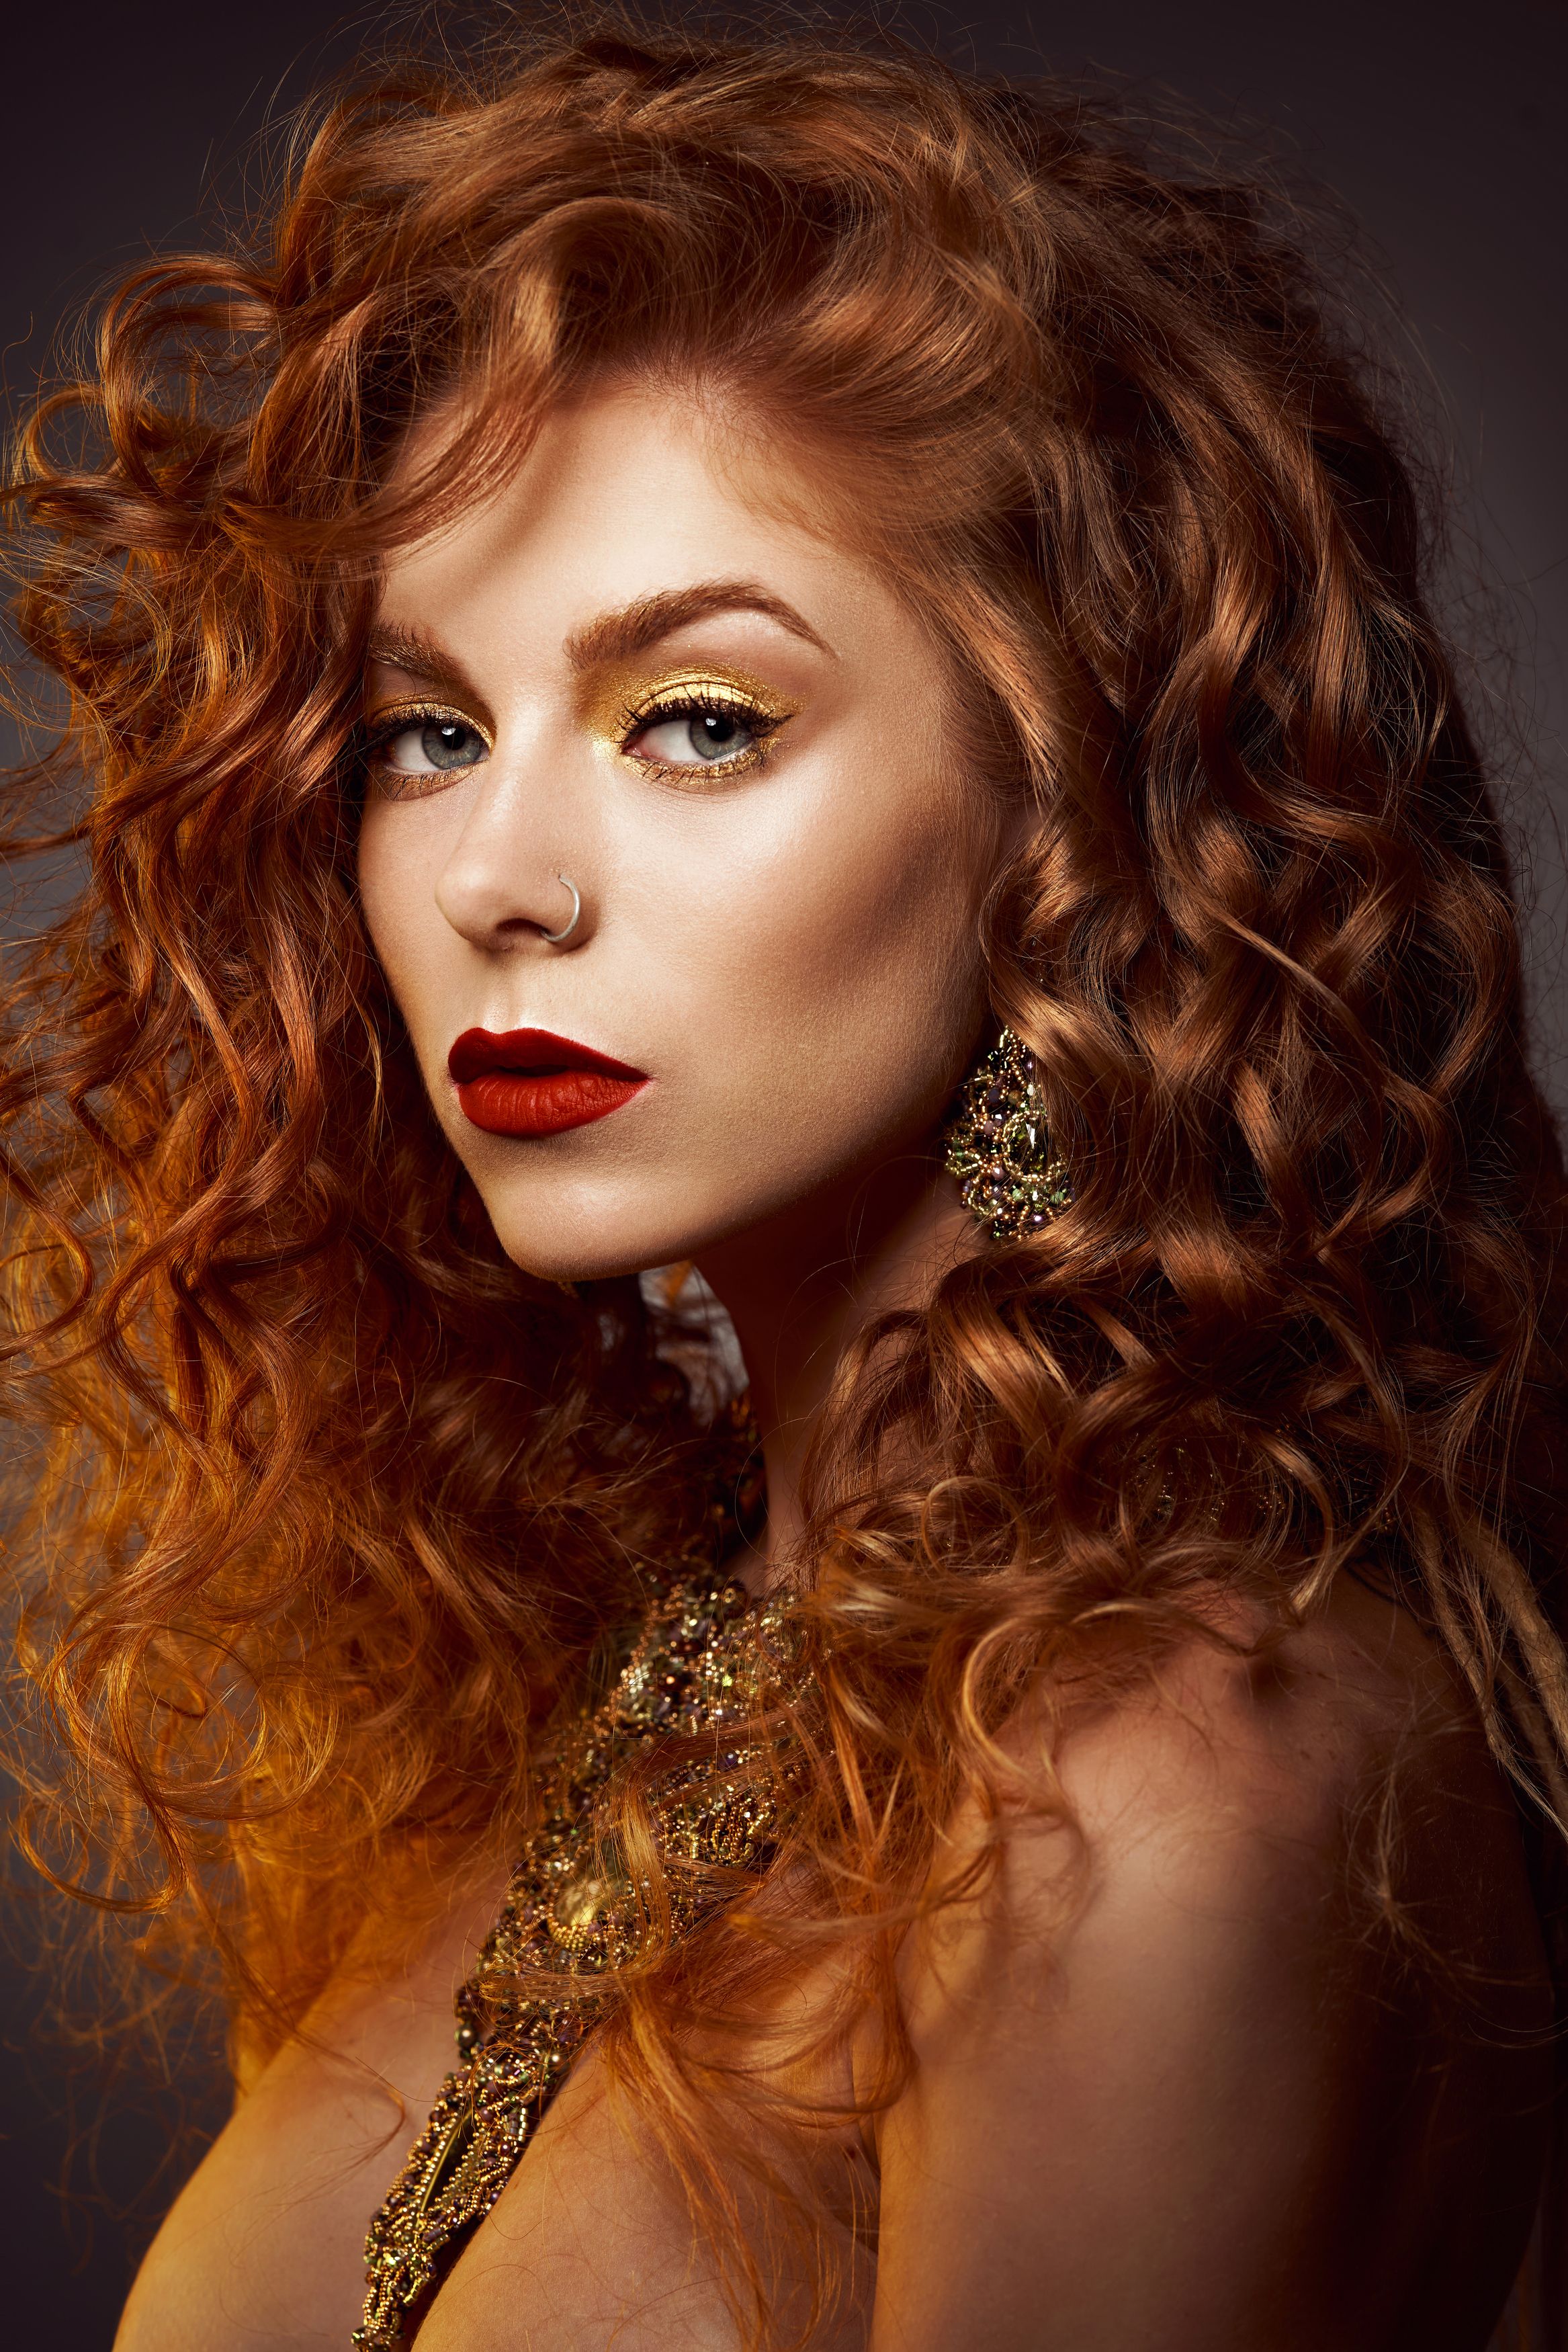 woman, portrait, girl, red, makeup, closeup, fashion, fashionable, cute, attractive, face, redhead, Евгений Кириллов